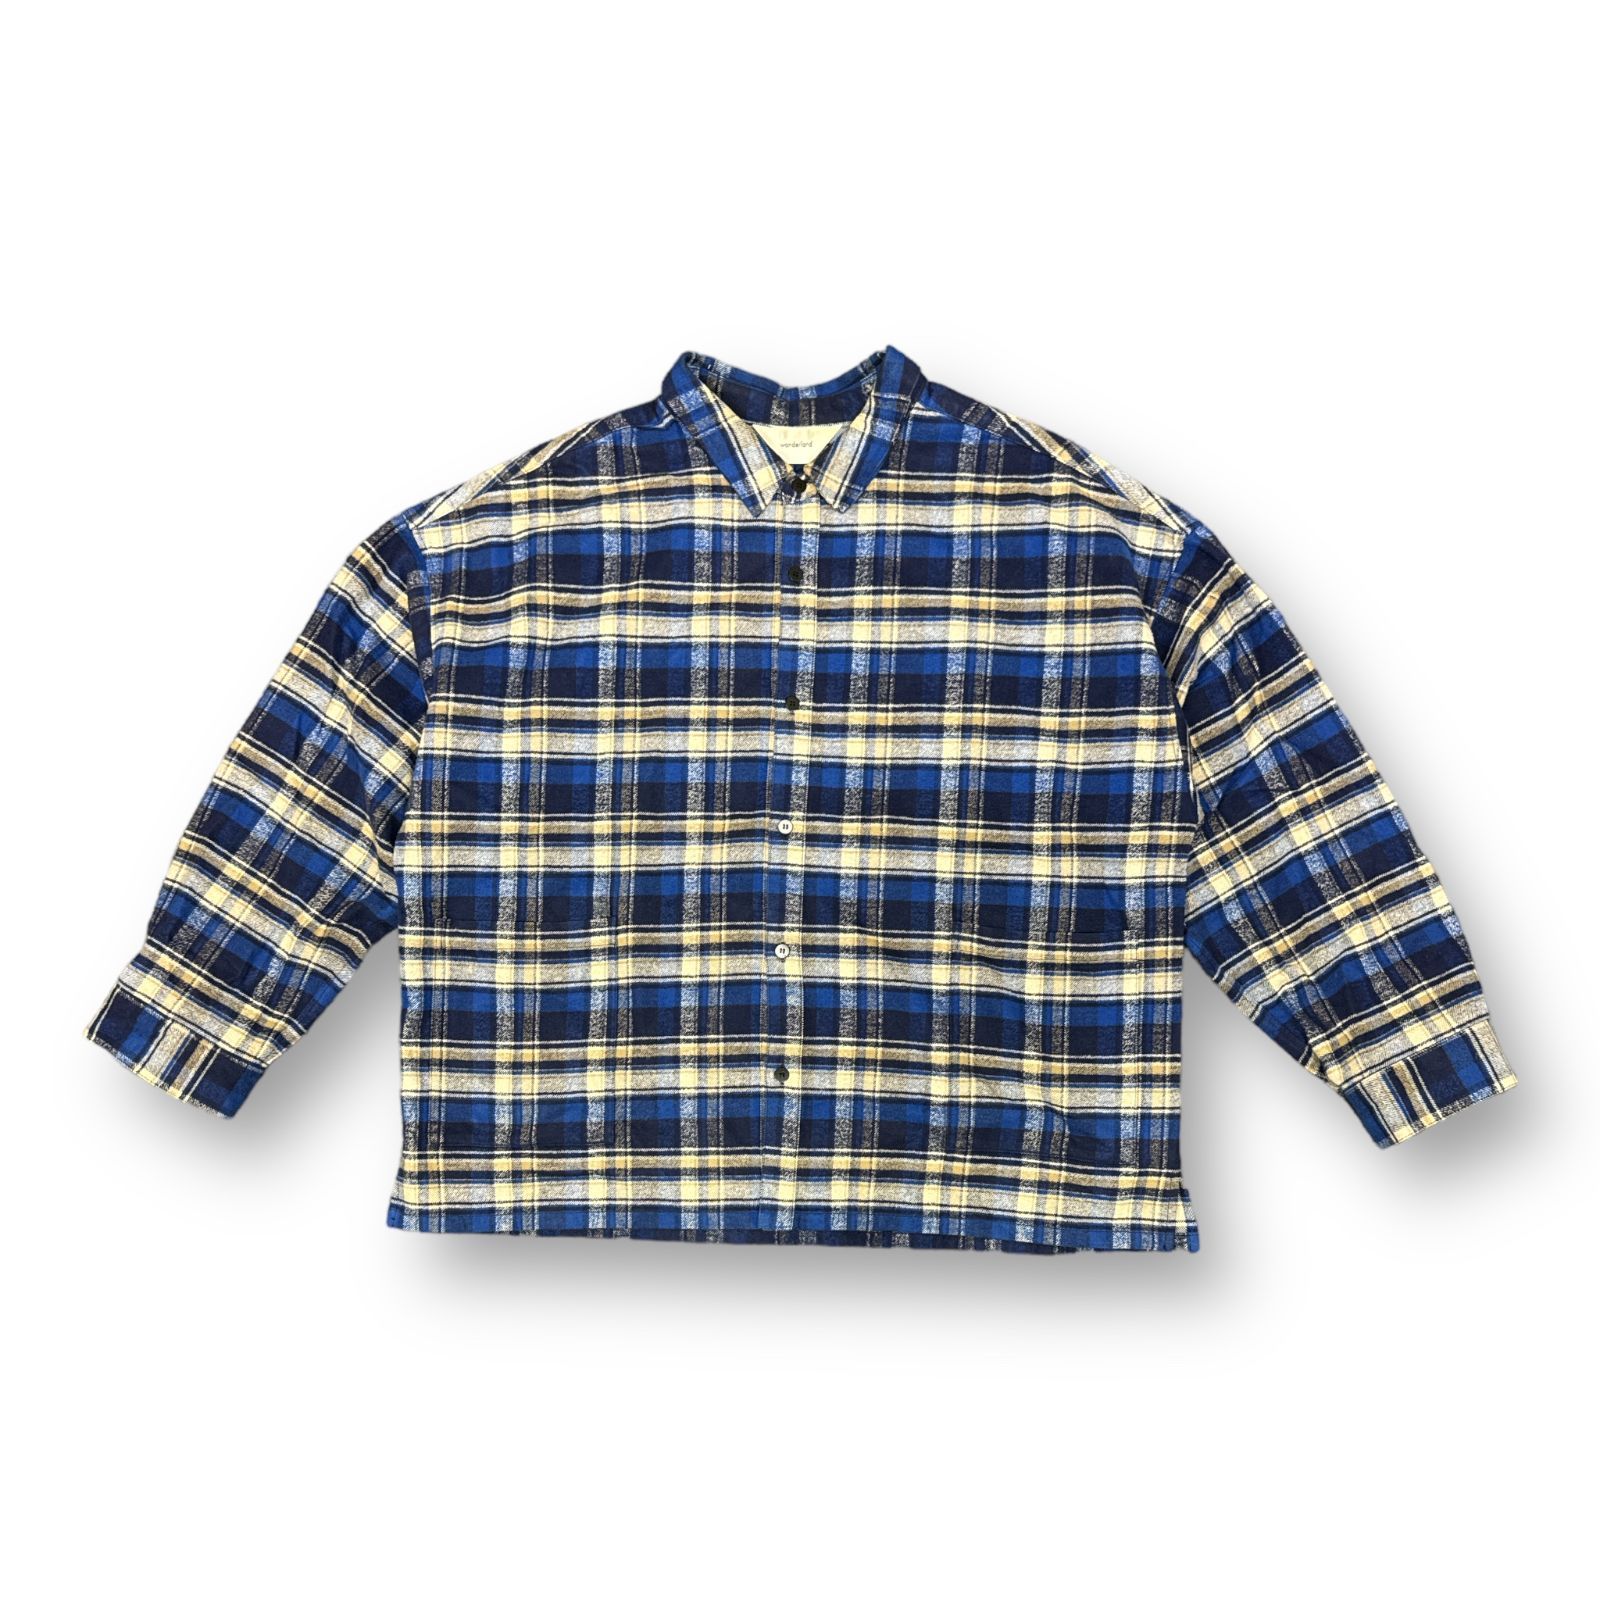 wonderland Check shirts blouson エルボパッチ付 オーバサイズ チェックシャツ ジャケット ワンダーランド 2  51170A